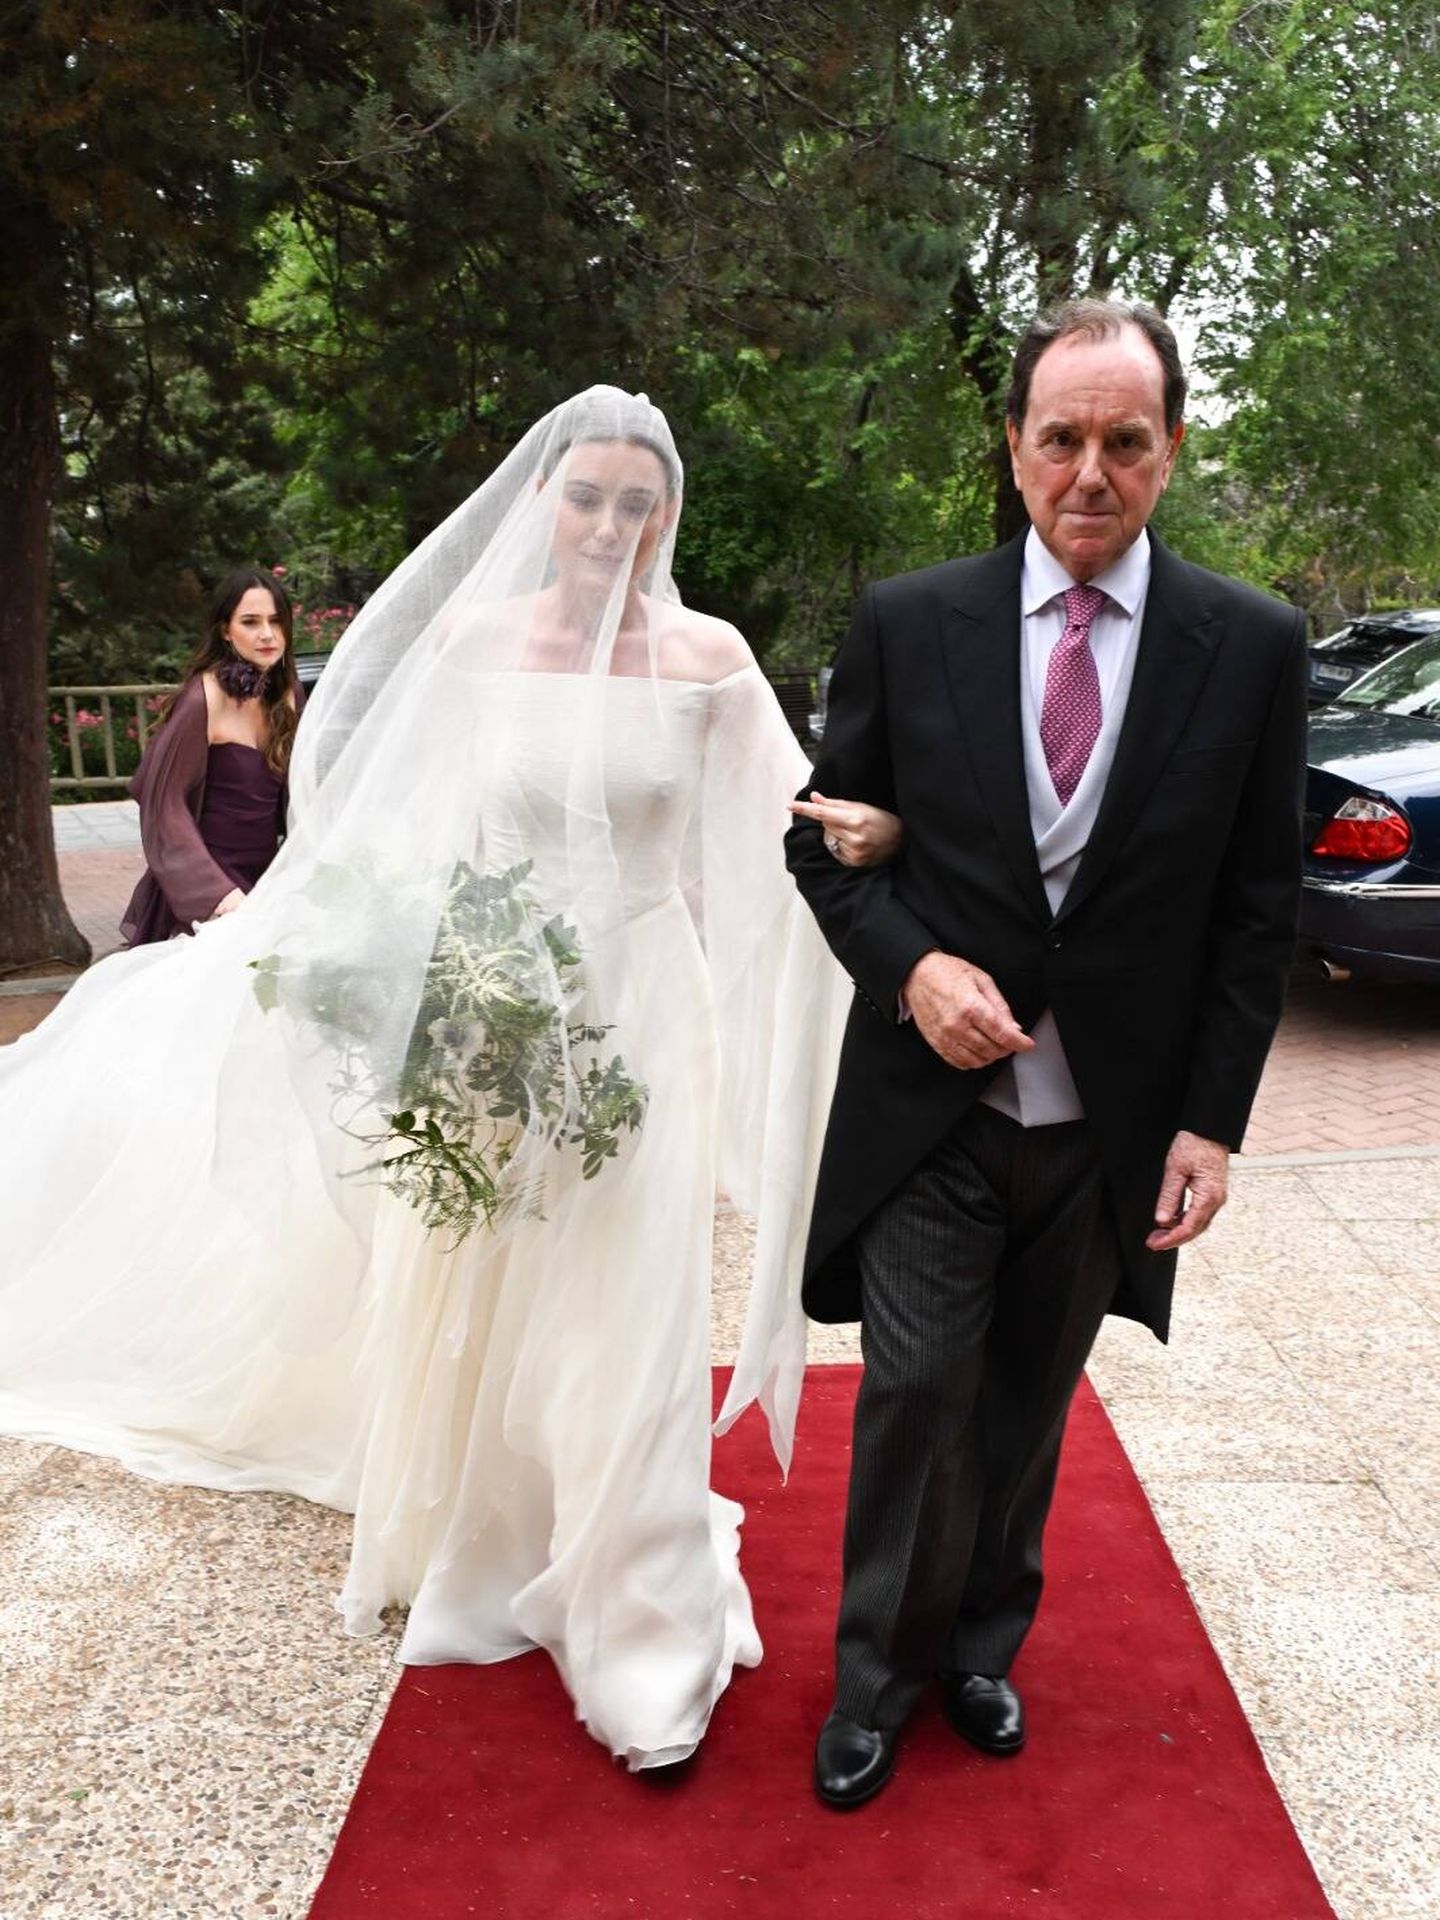 La boda de Natalia Alfonsín, hija de Jaime Alfonsín. (Contacto Photo)